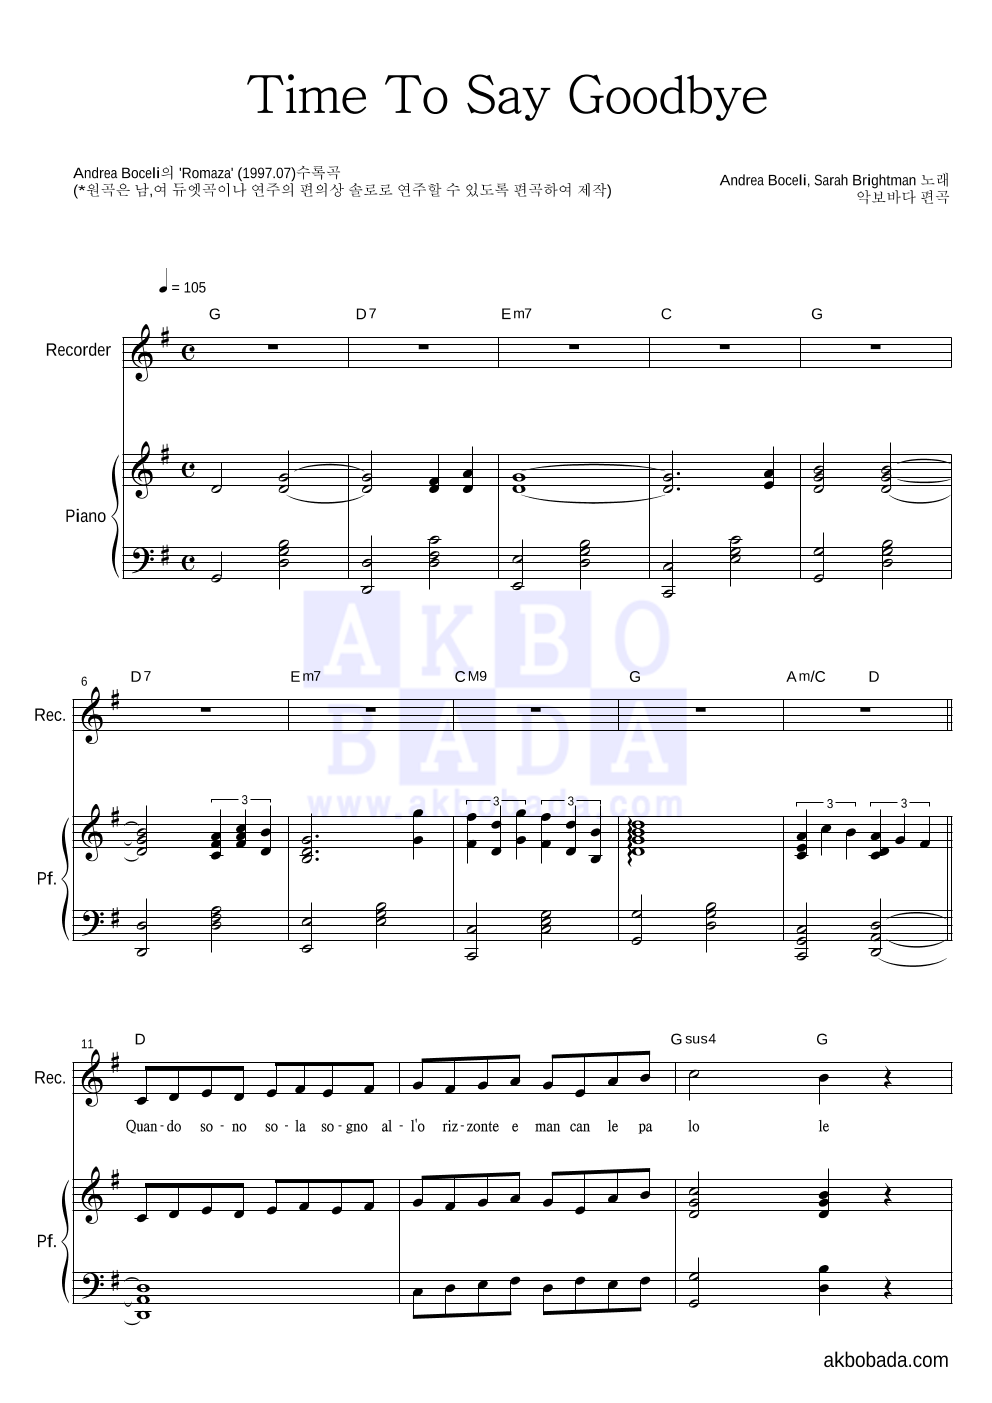 Andrea Bocelli - Time To Say Goodbye 리코더&피아노 악보 